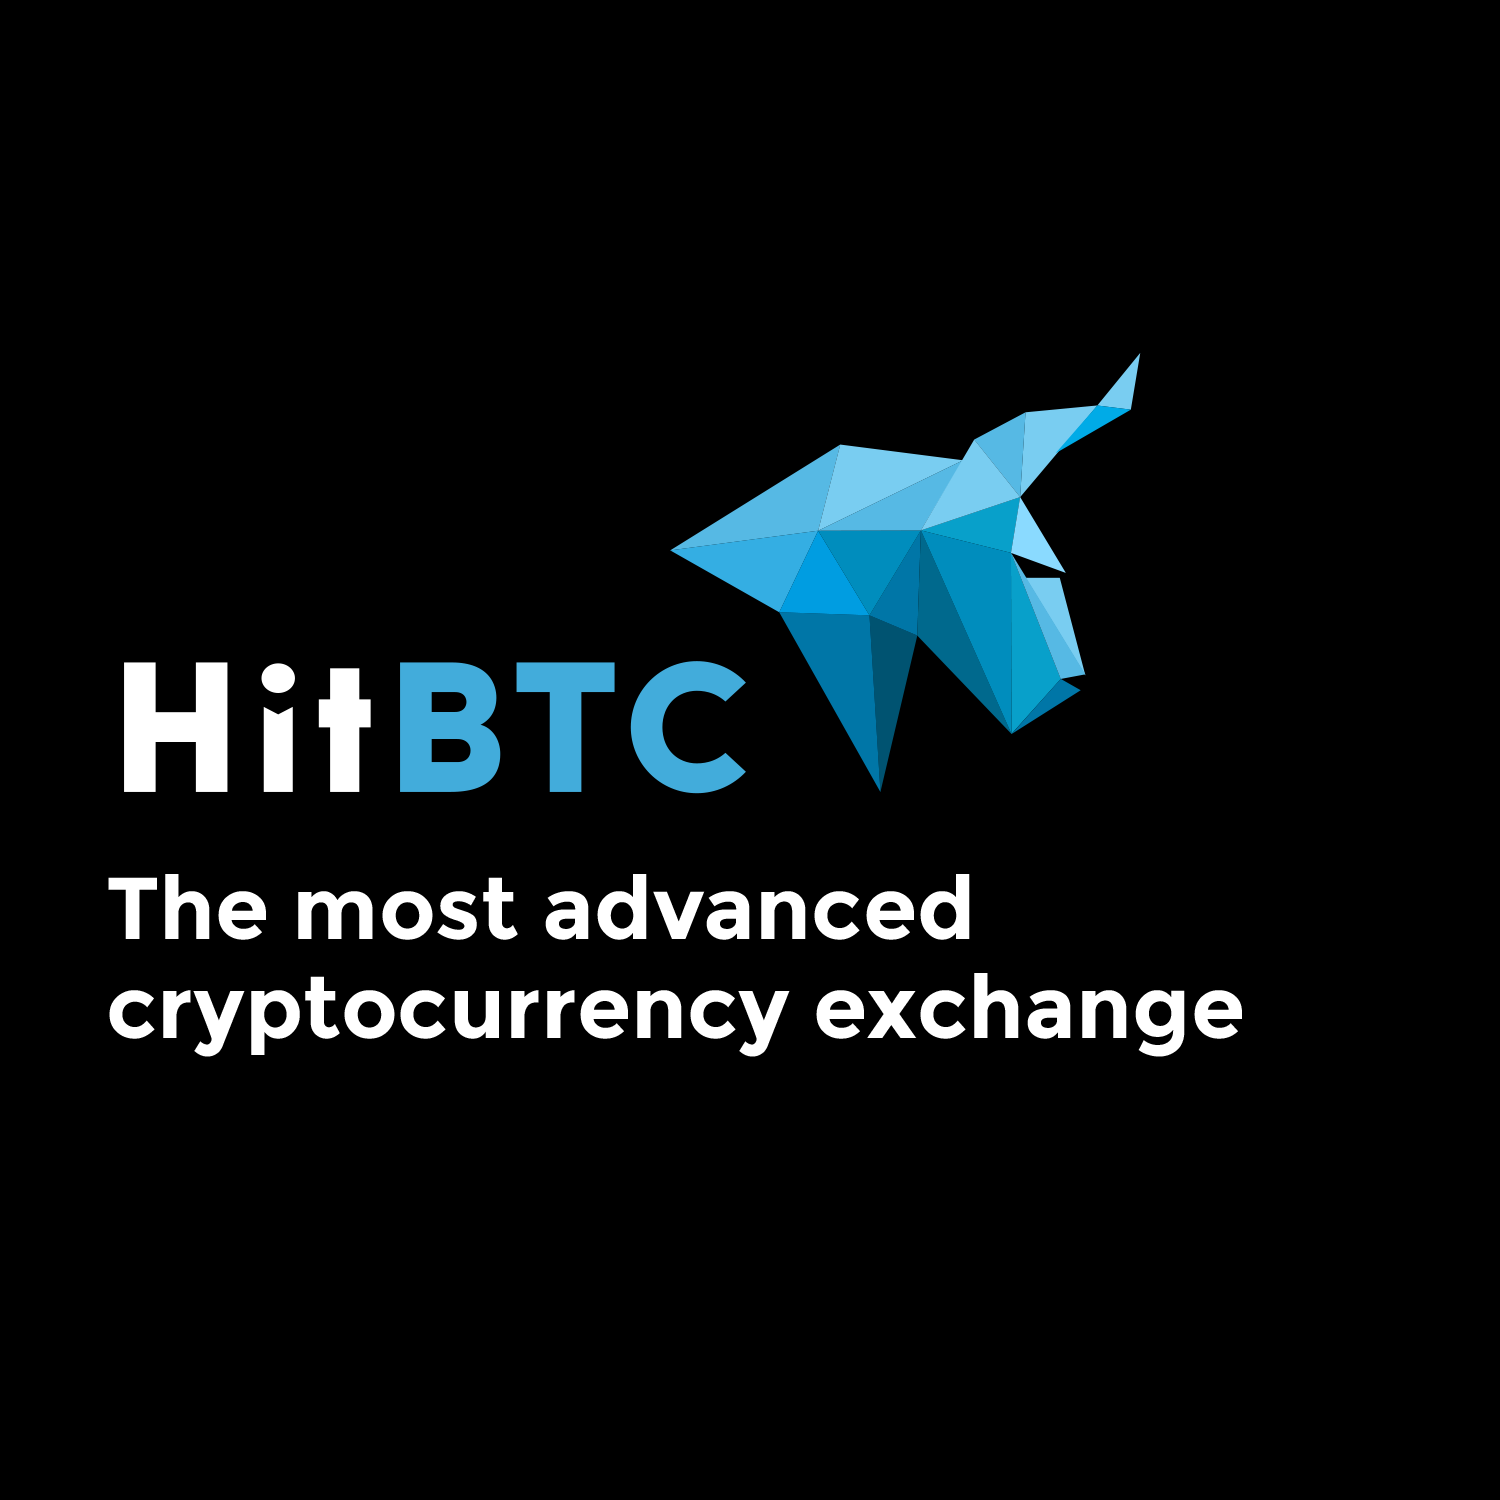 Hitbtc exchange ltc for btc nba betting lines cbs